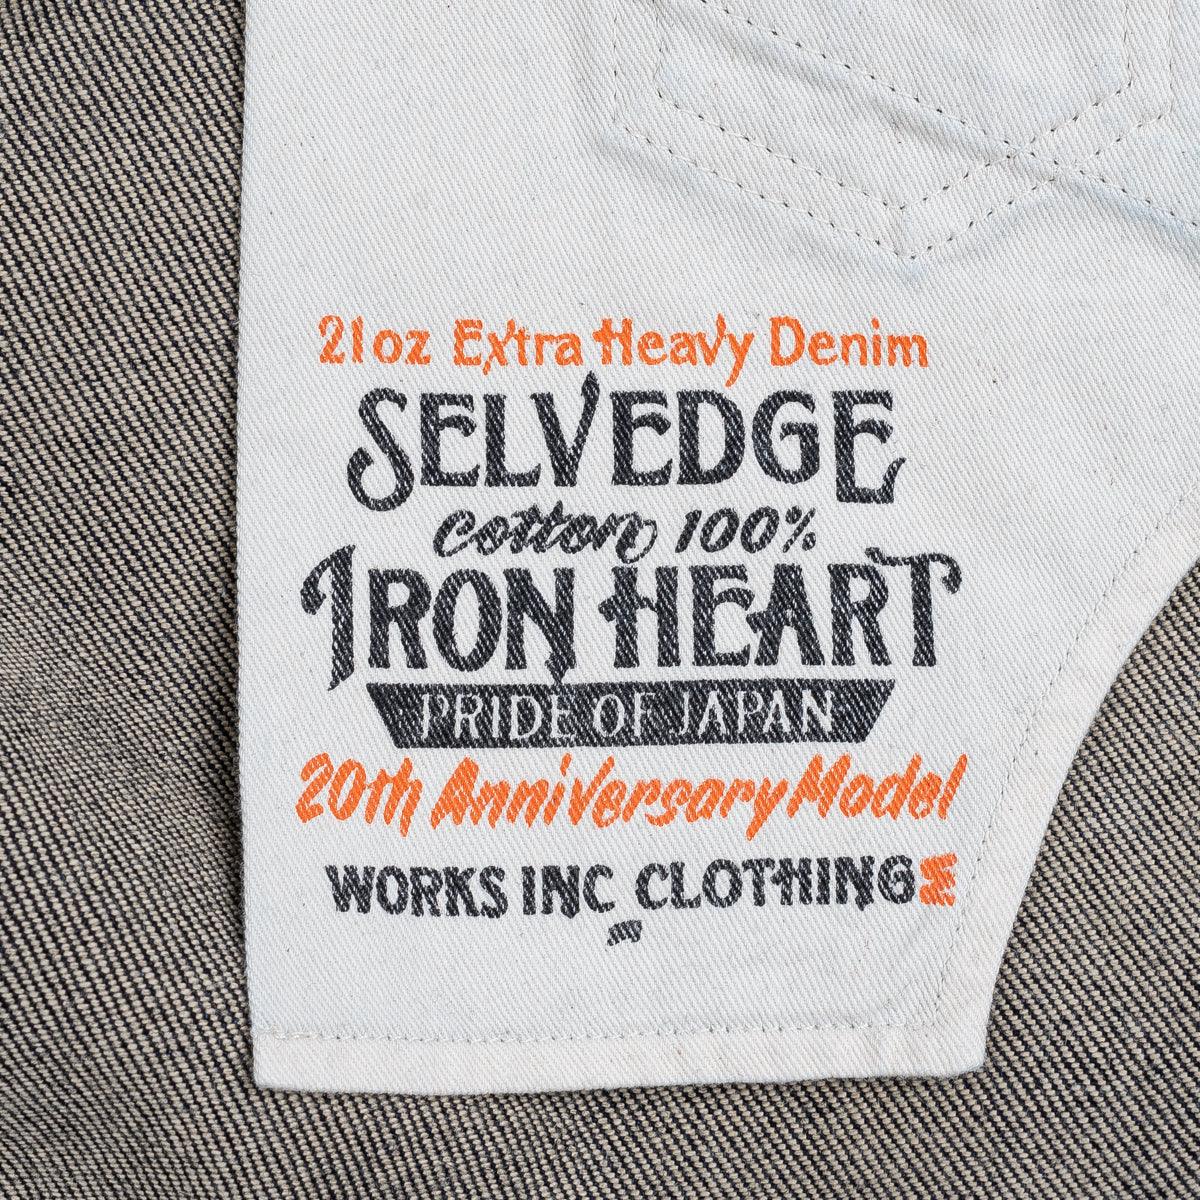 IH-634S-A - 21oz Selvedge Denim Straight Cut Jeans (20th Anniversary Edition)